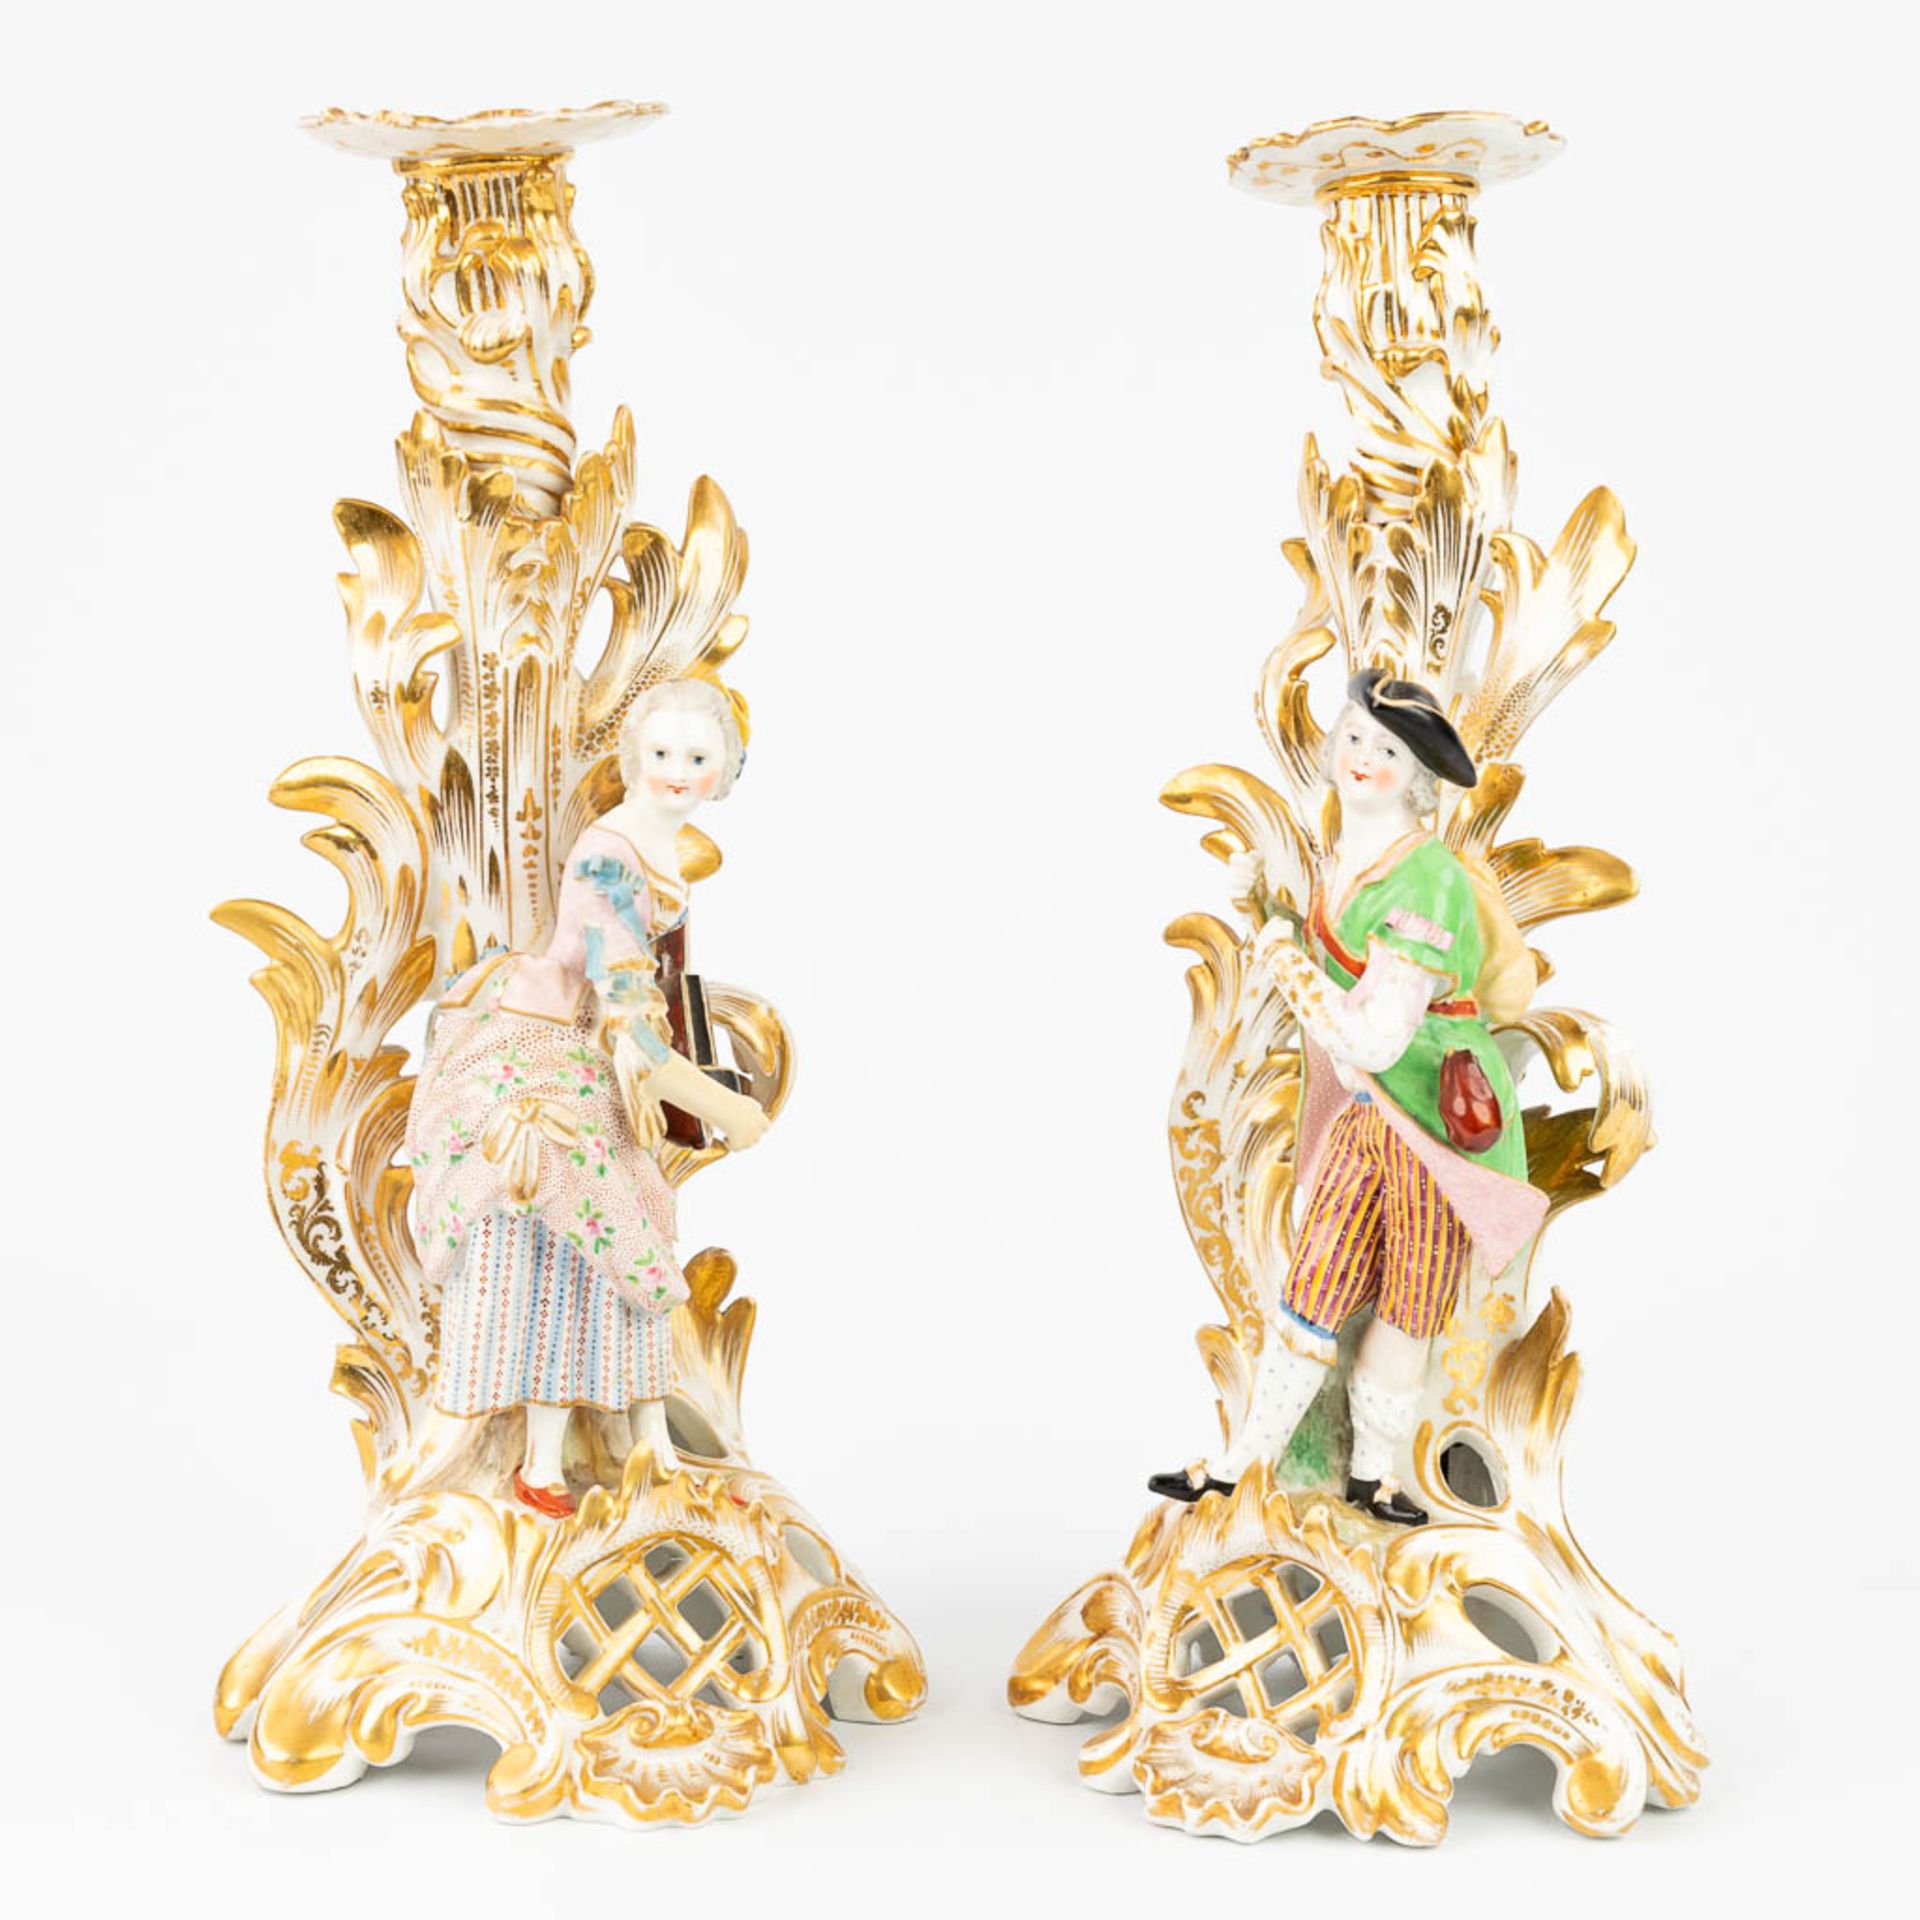 JACOB-PETIT (1796-1868) A pair of candlesticks made of porcelain (13 x 14 x 34cm) - Image 11 of 15